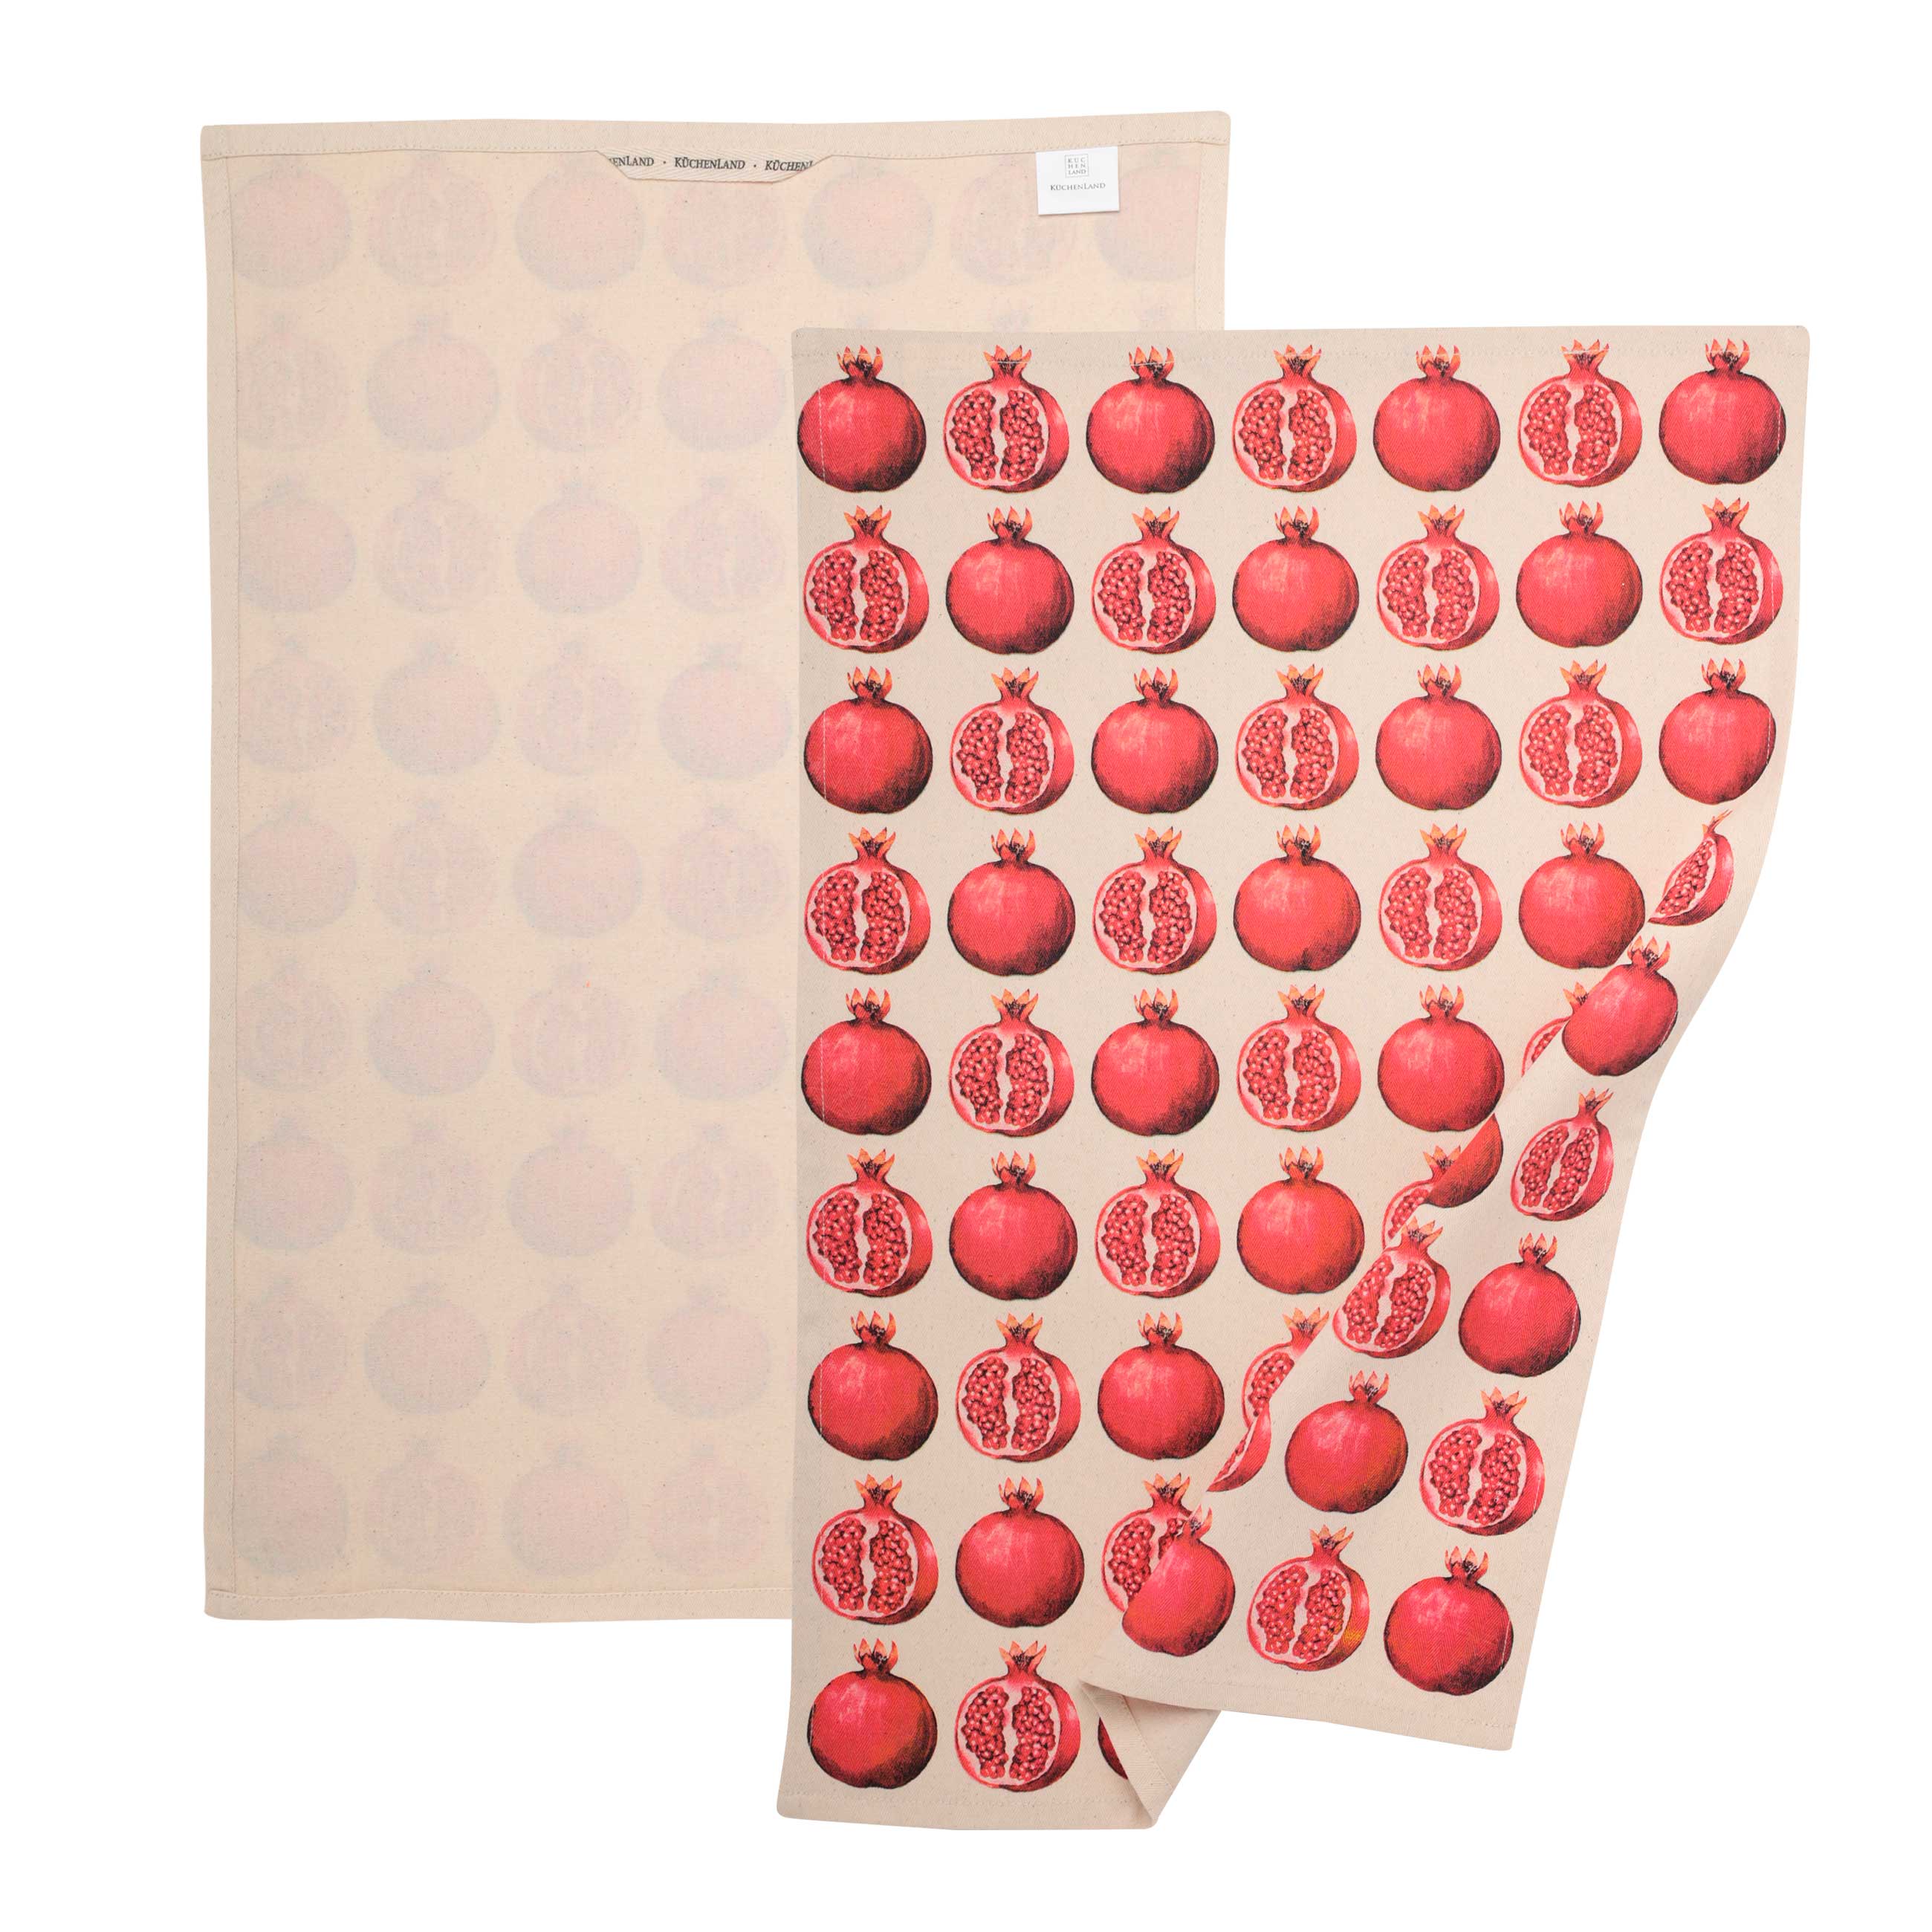 Полотенце кухонное, 40x60 см, 3 шт, хлопок, бежевое/красное, Гранаты, Pomegranate